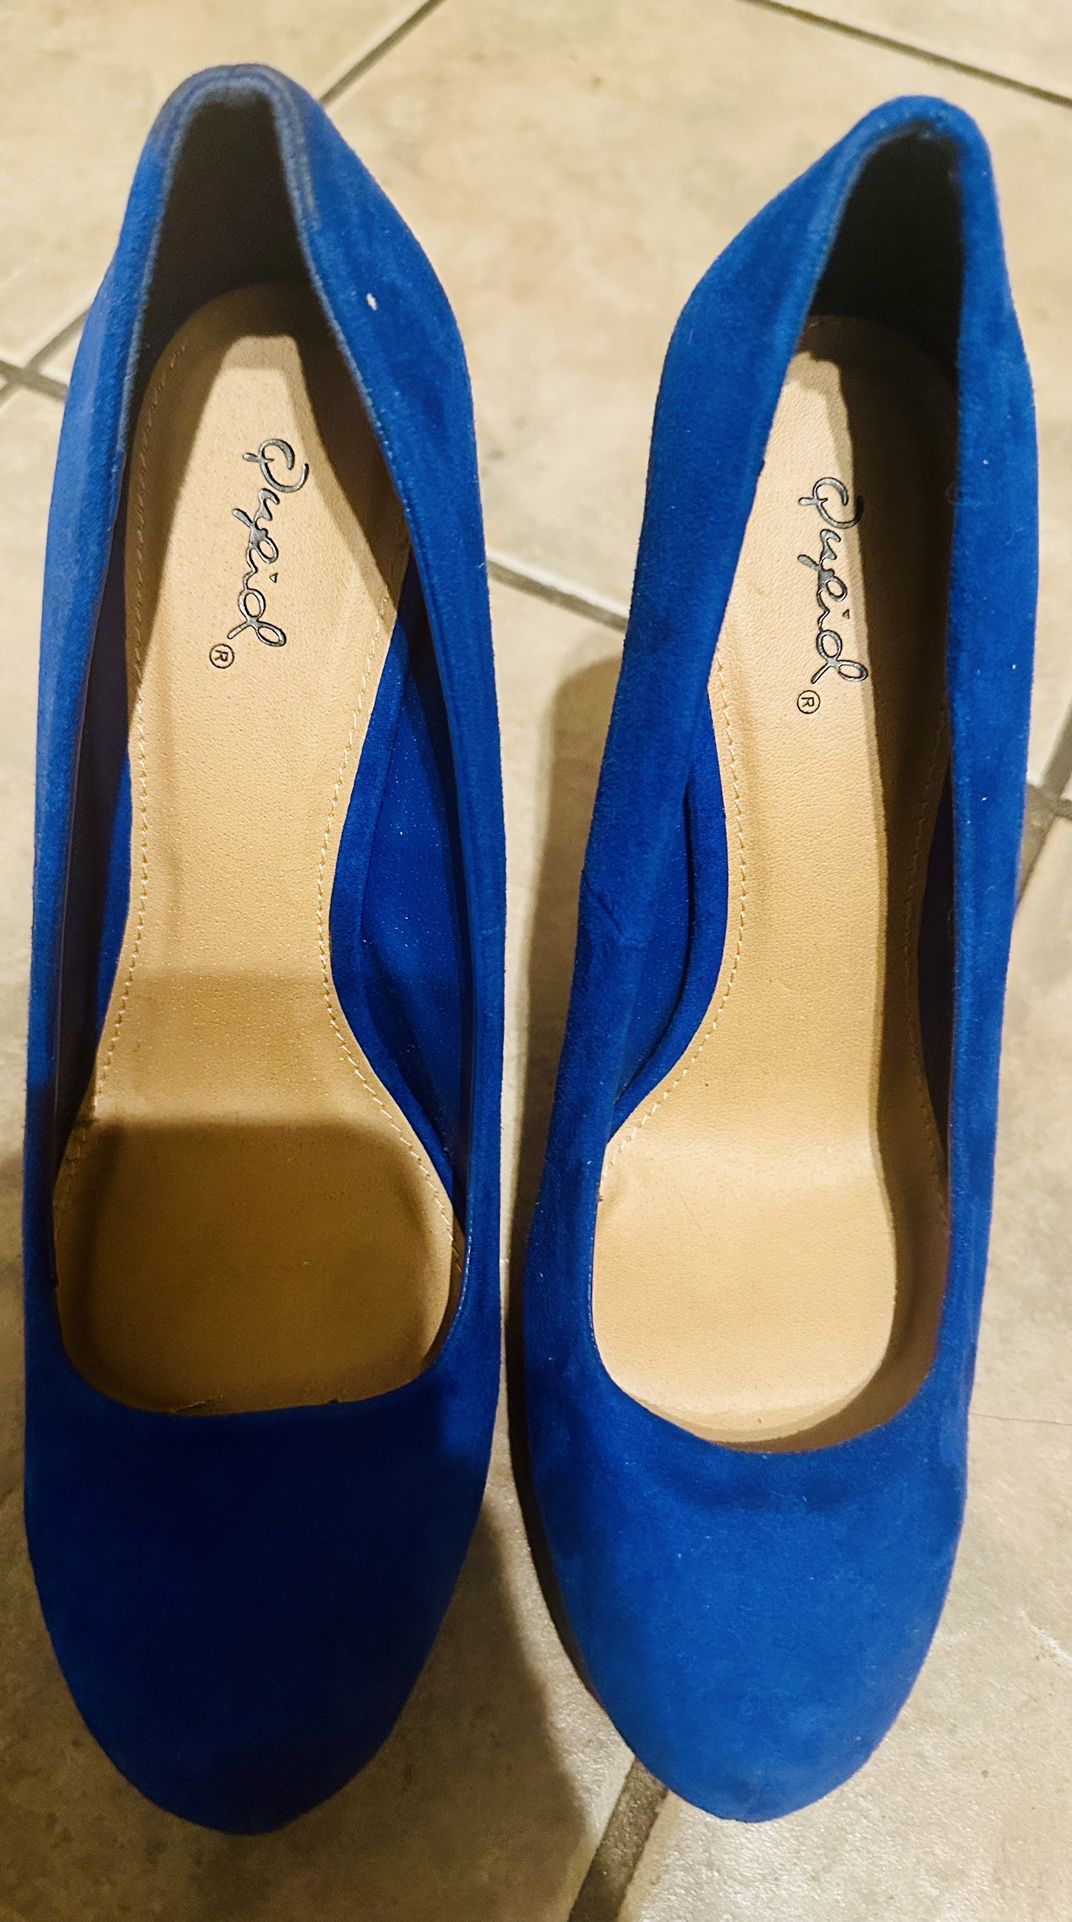 Women Vintage Fabric Upper Royal Blue Stiletto Platform High Heels by Qupid Size 8 Women Slip on Shoes/ Women Dress Shoes